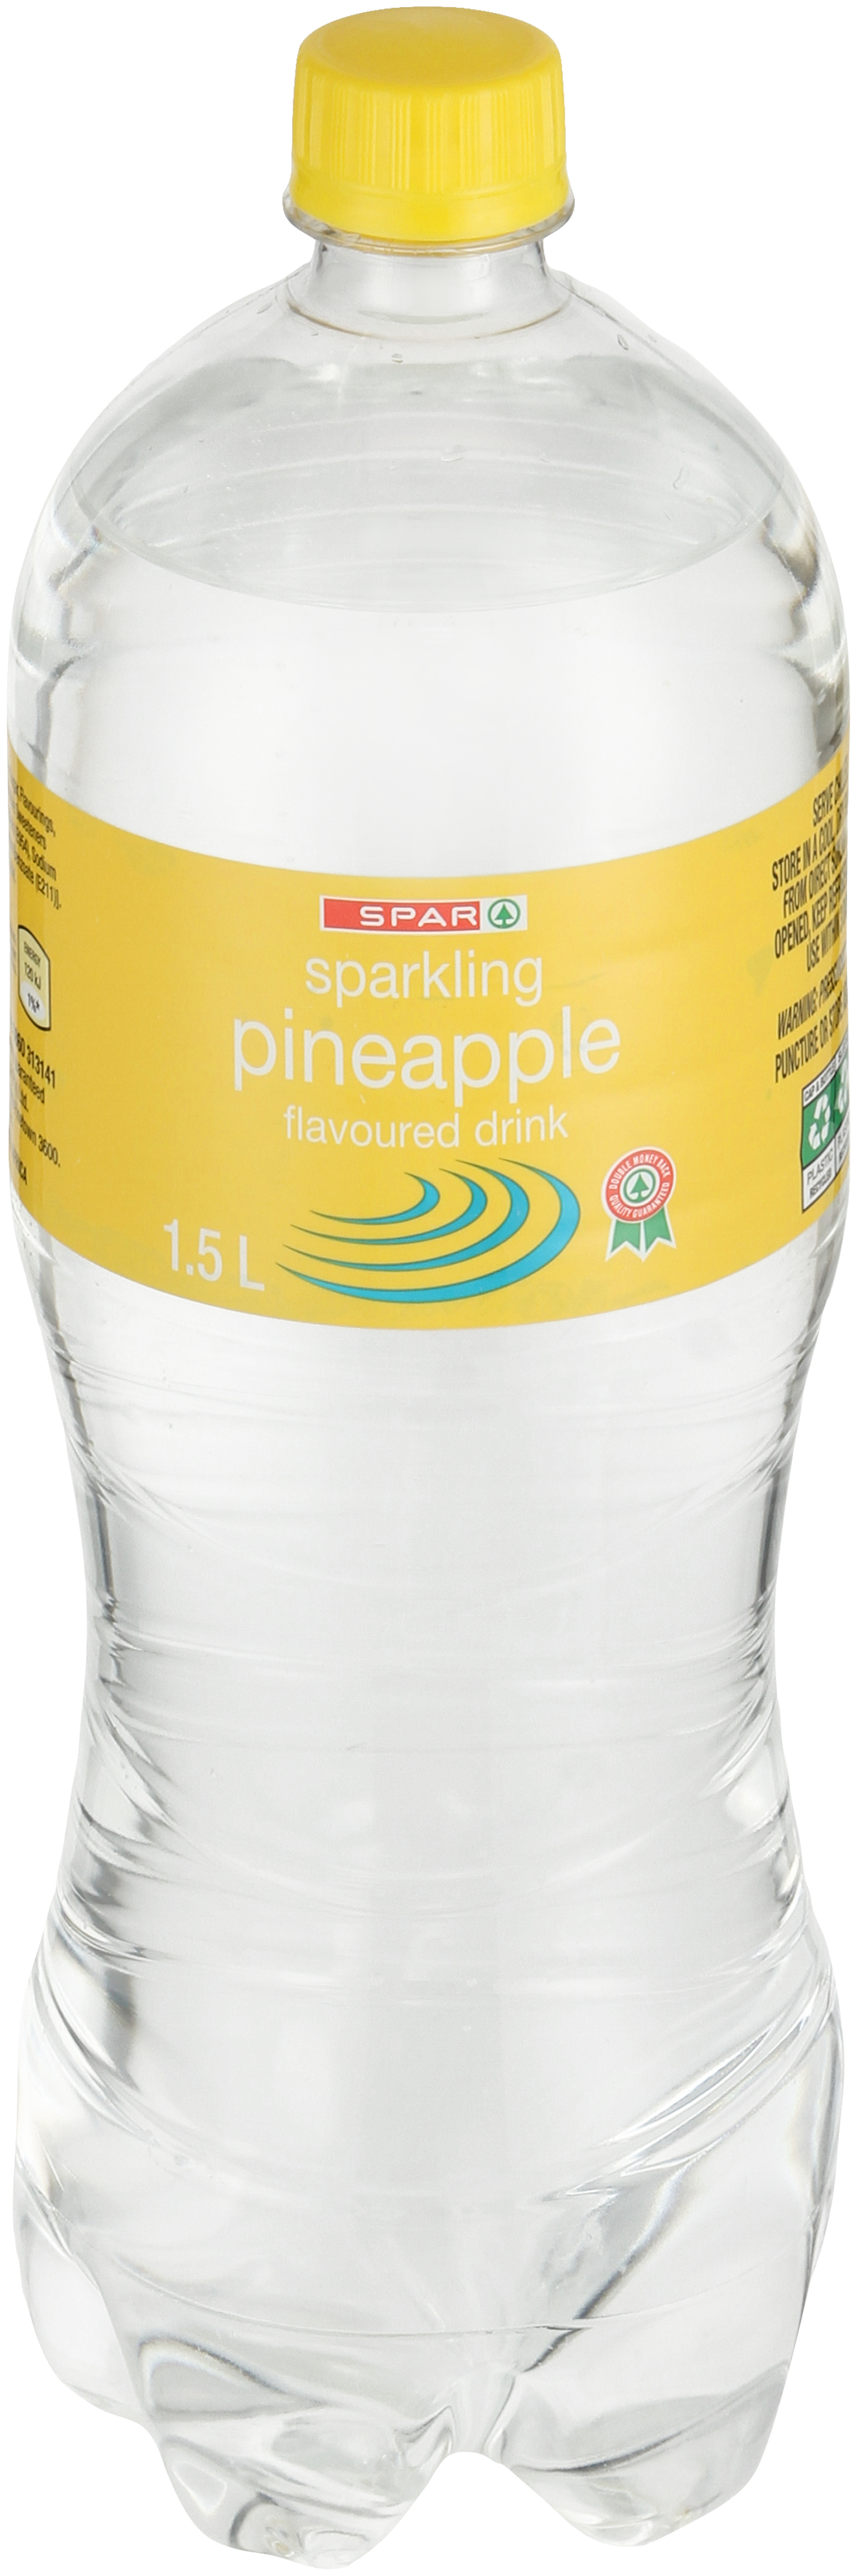 sparkling flavoured drink pineapple 